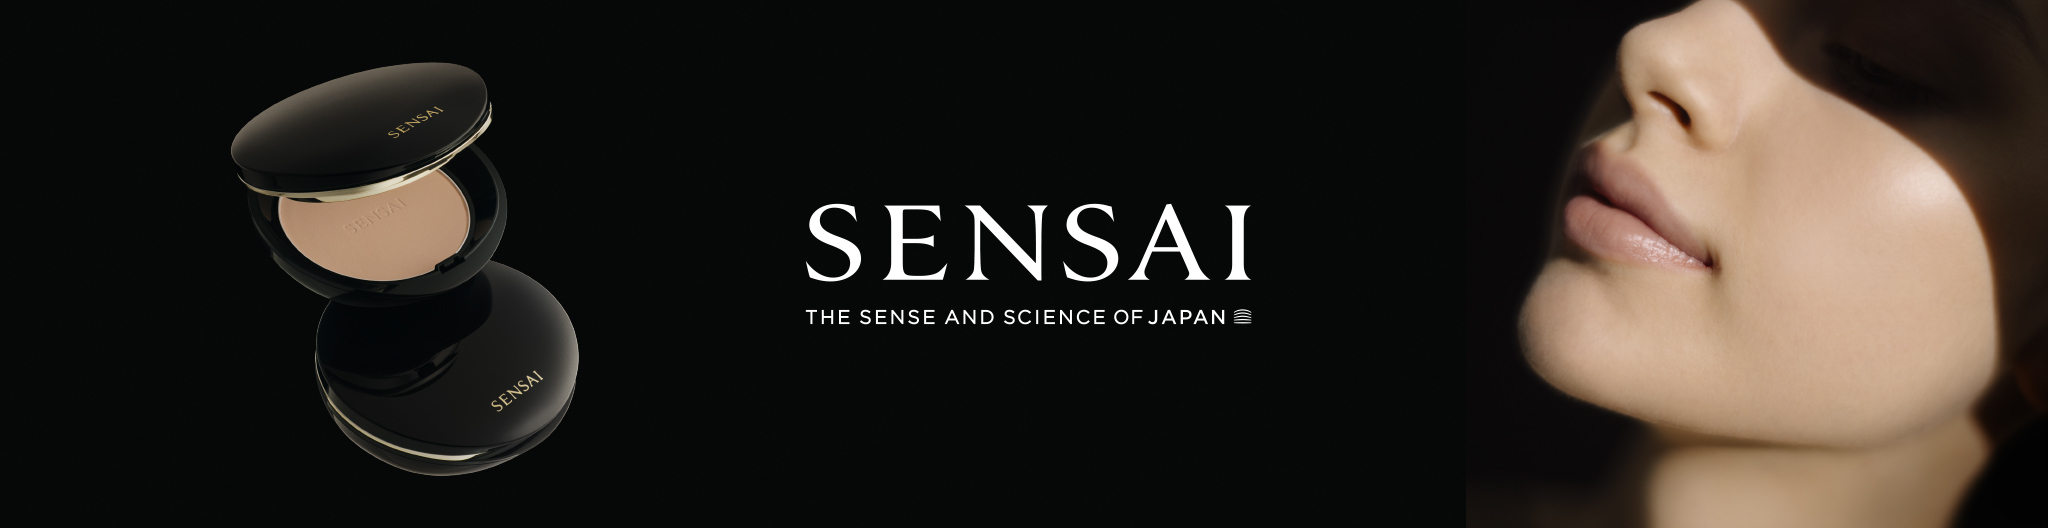 SENSAI The Sense and Science of Japan